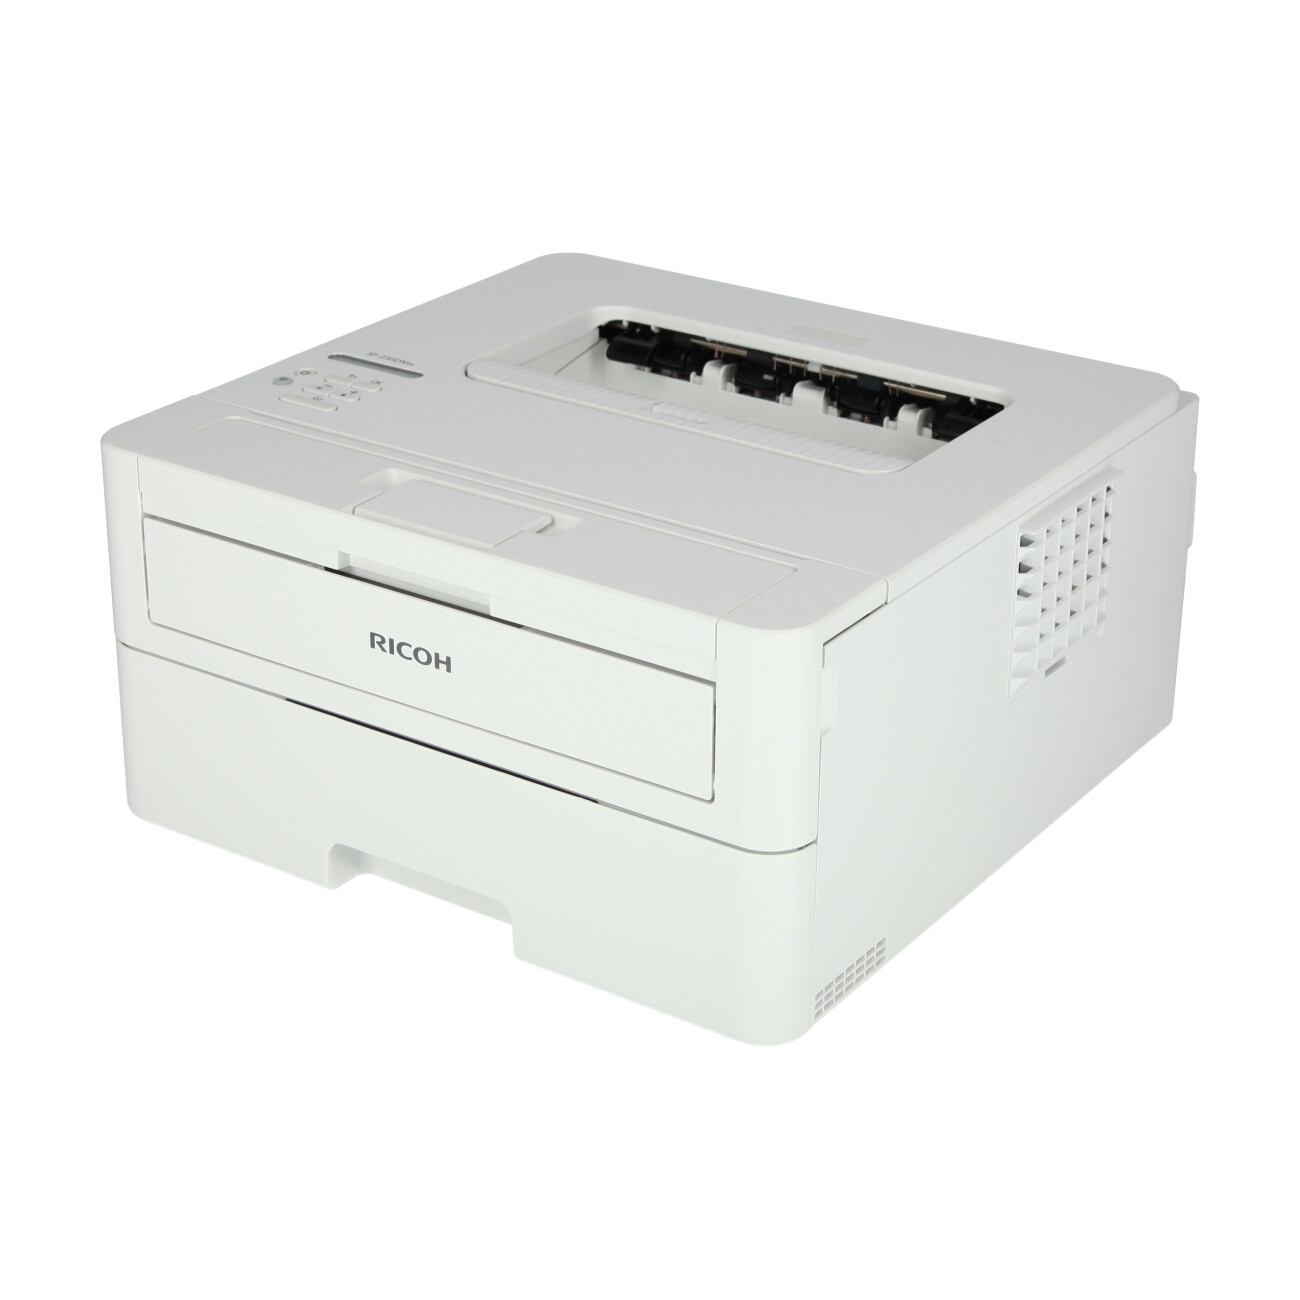 Ricoh-SP-230DNw-Printer